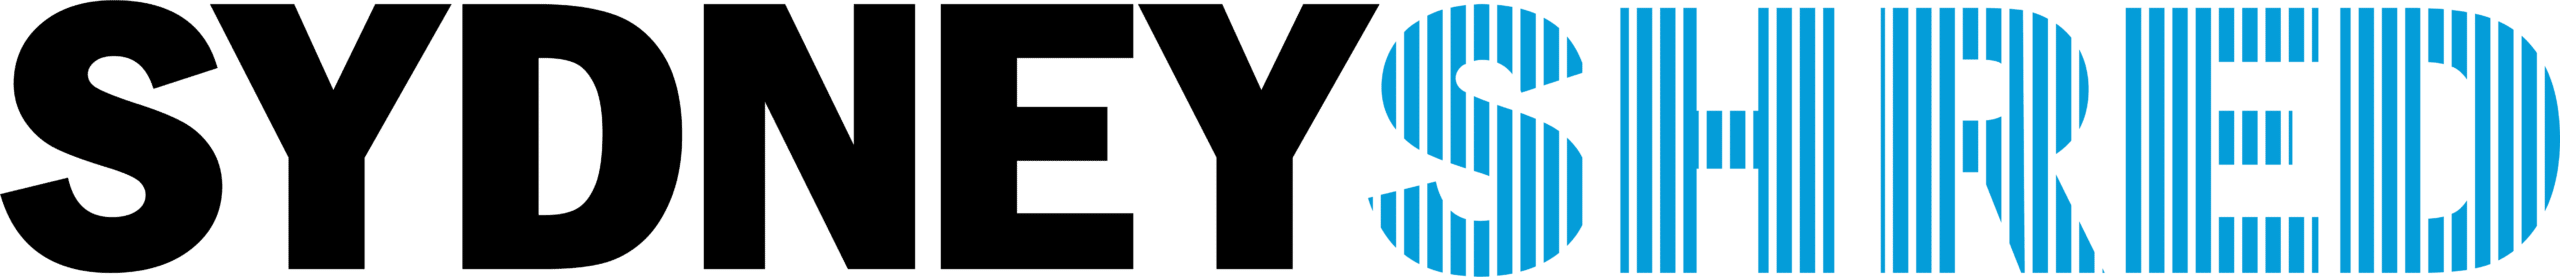 Sydneyshred logo 5